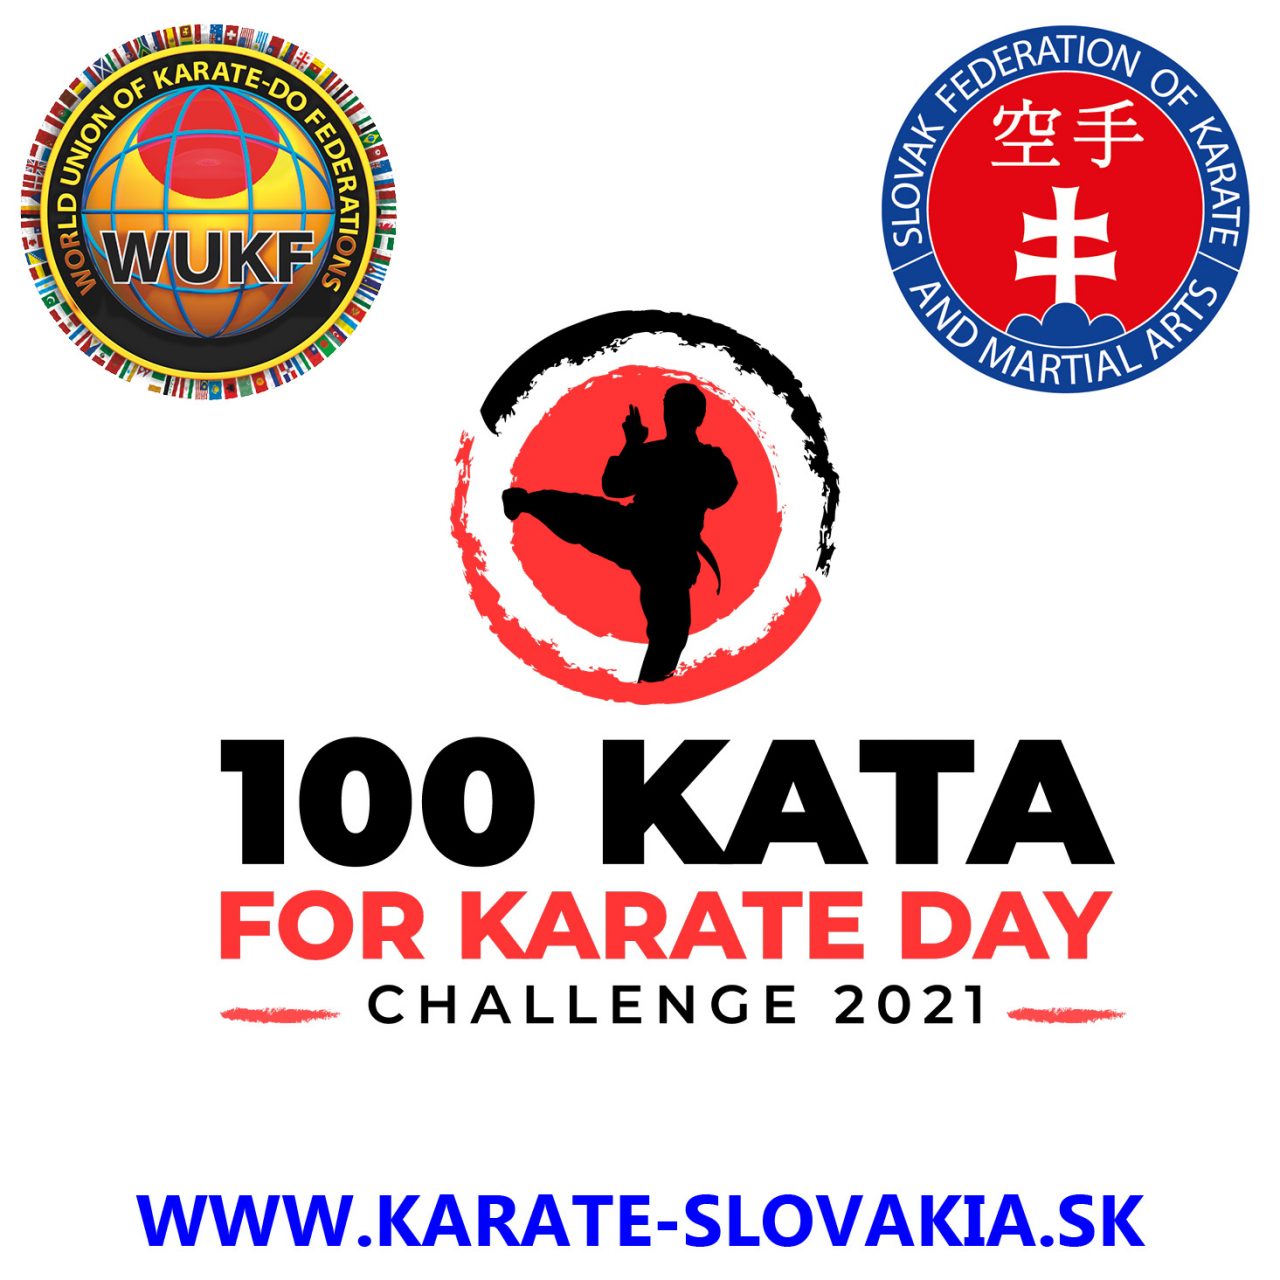 https://karate-slovakia.sk/wp-content/uploads/fb-plagat-1280x1280.jpg